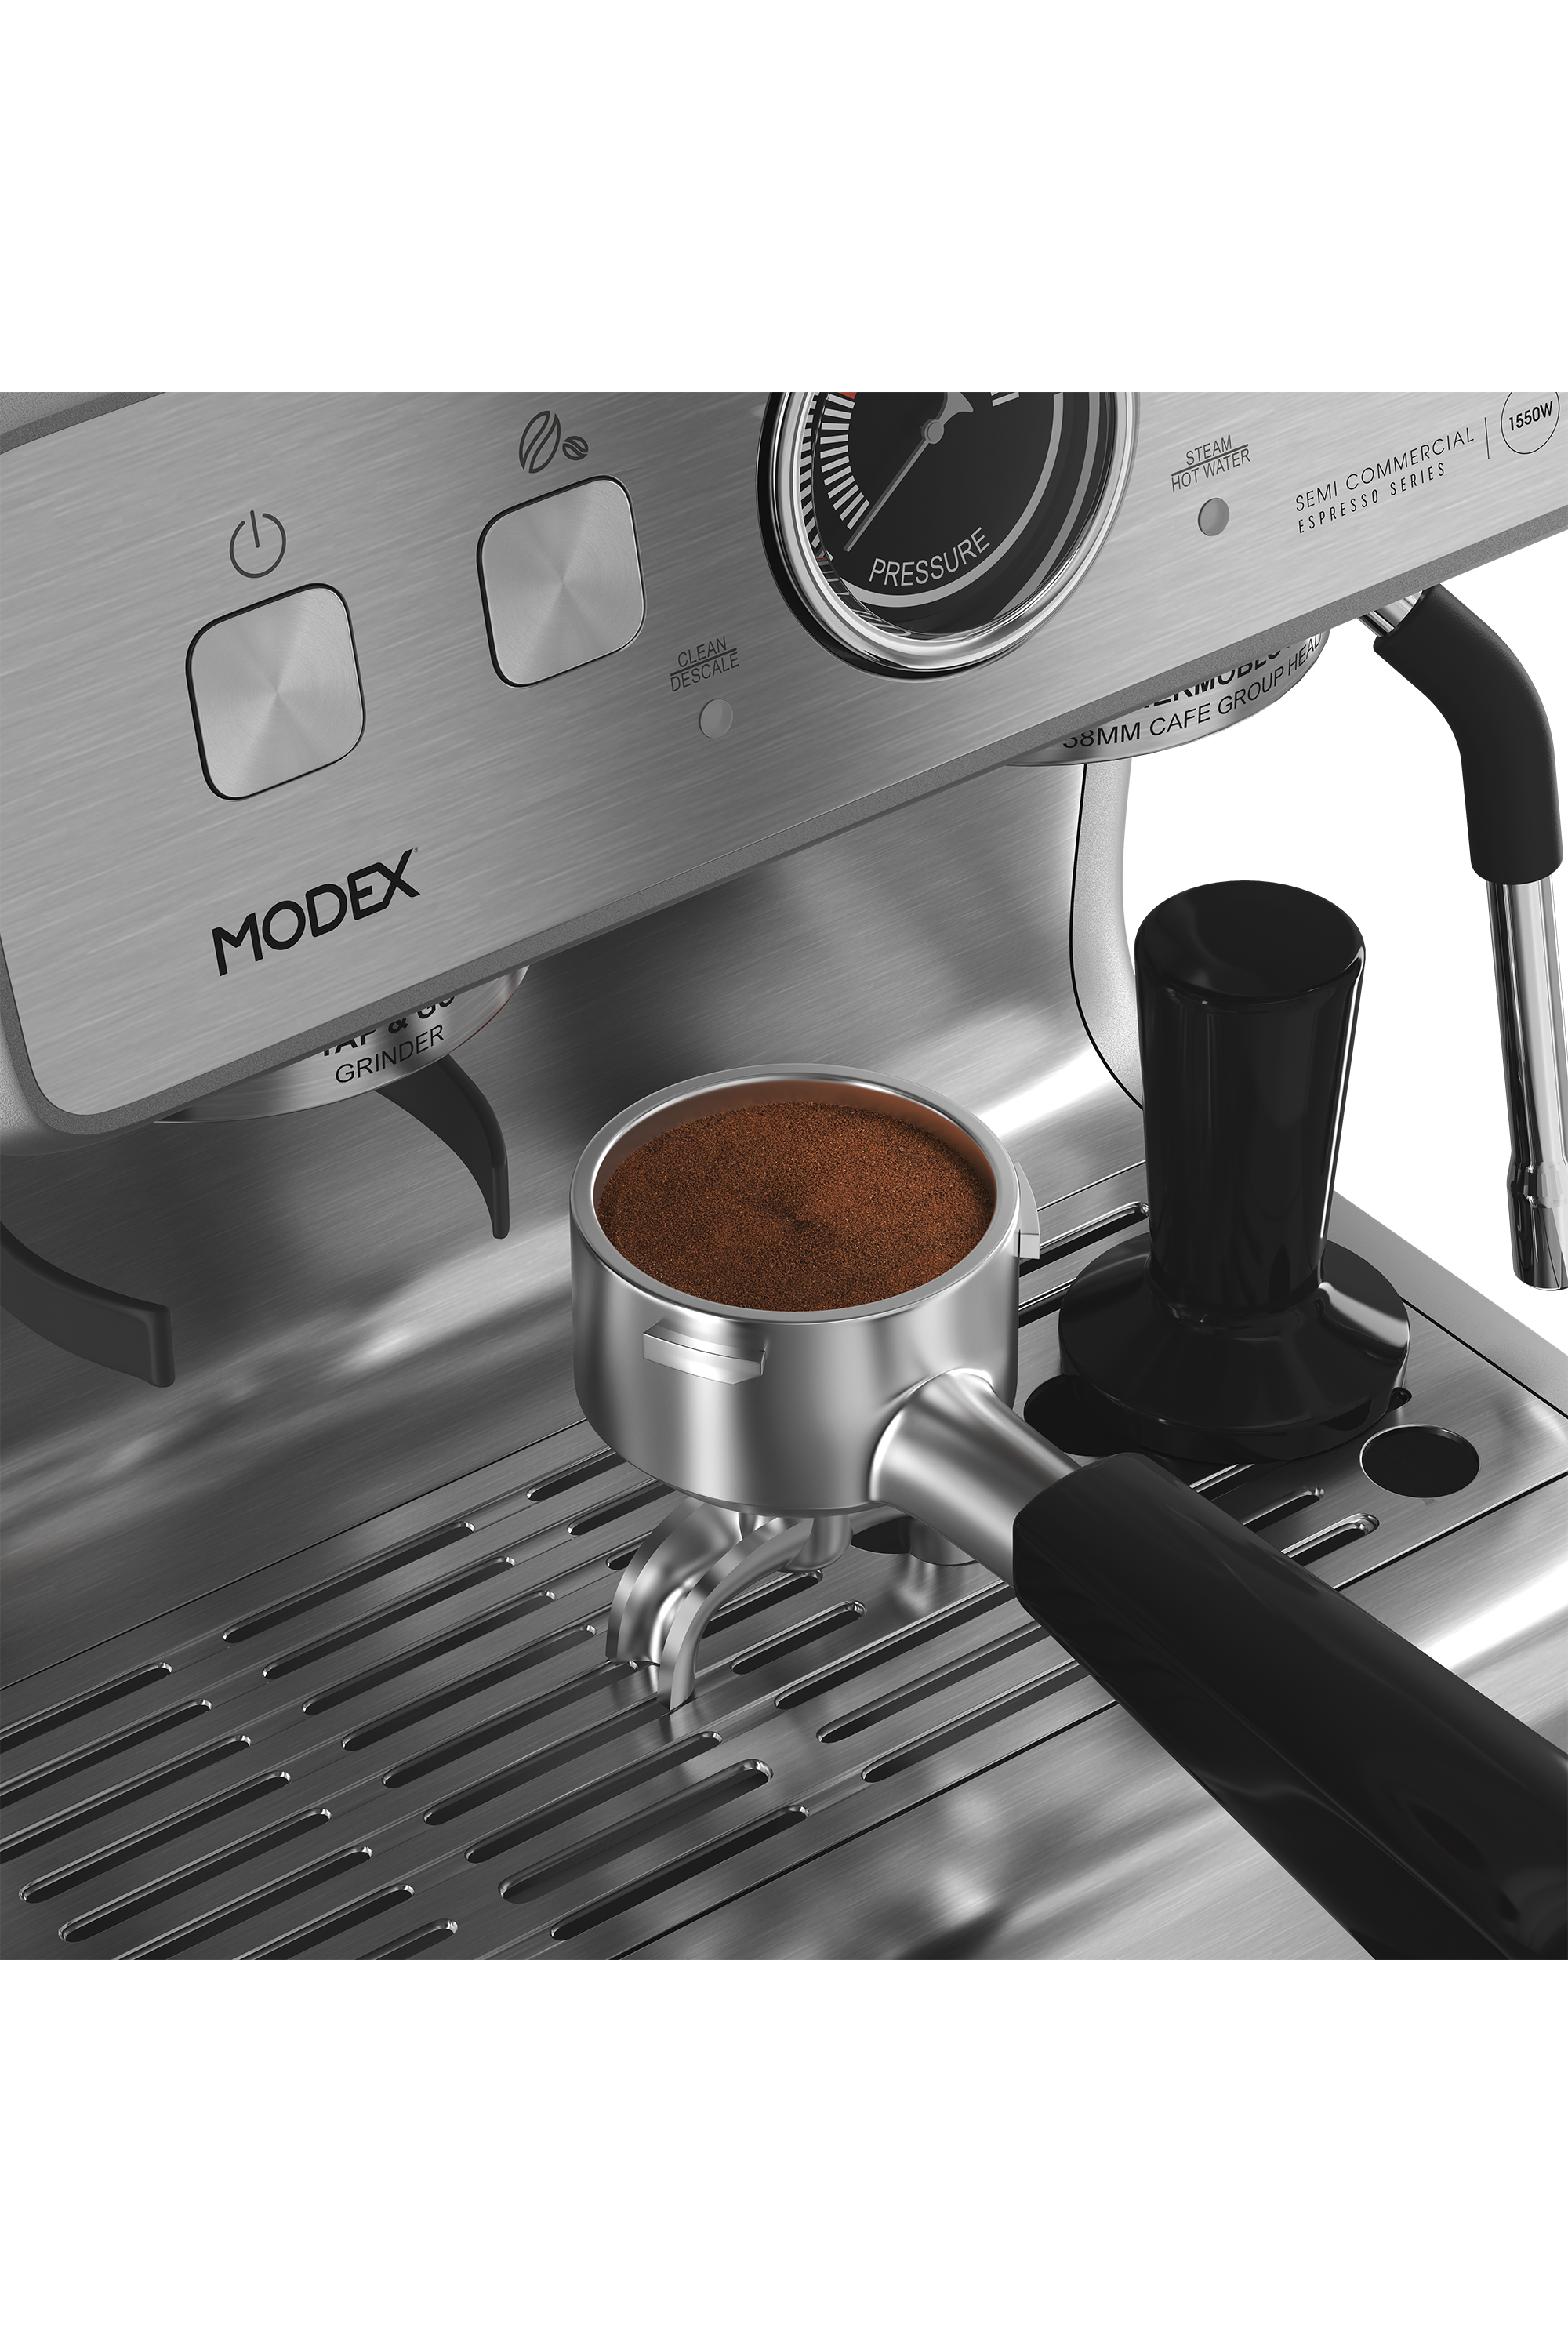 Es4700 Espresso Machine